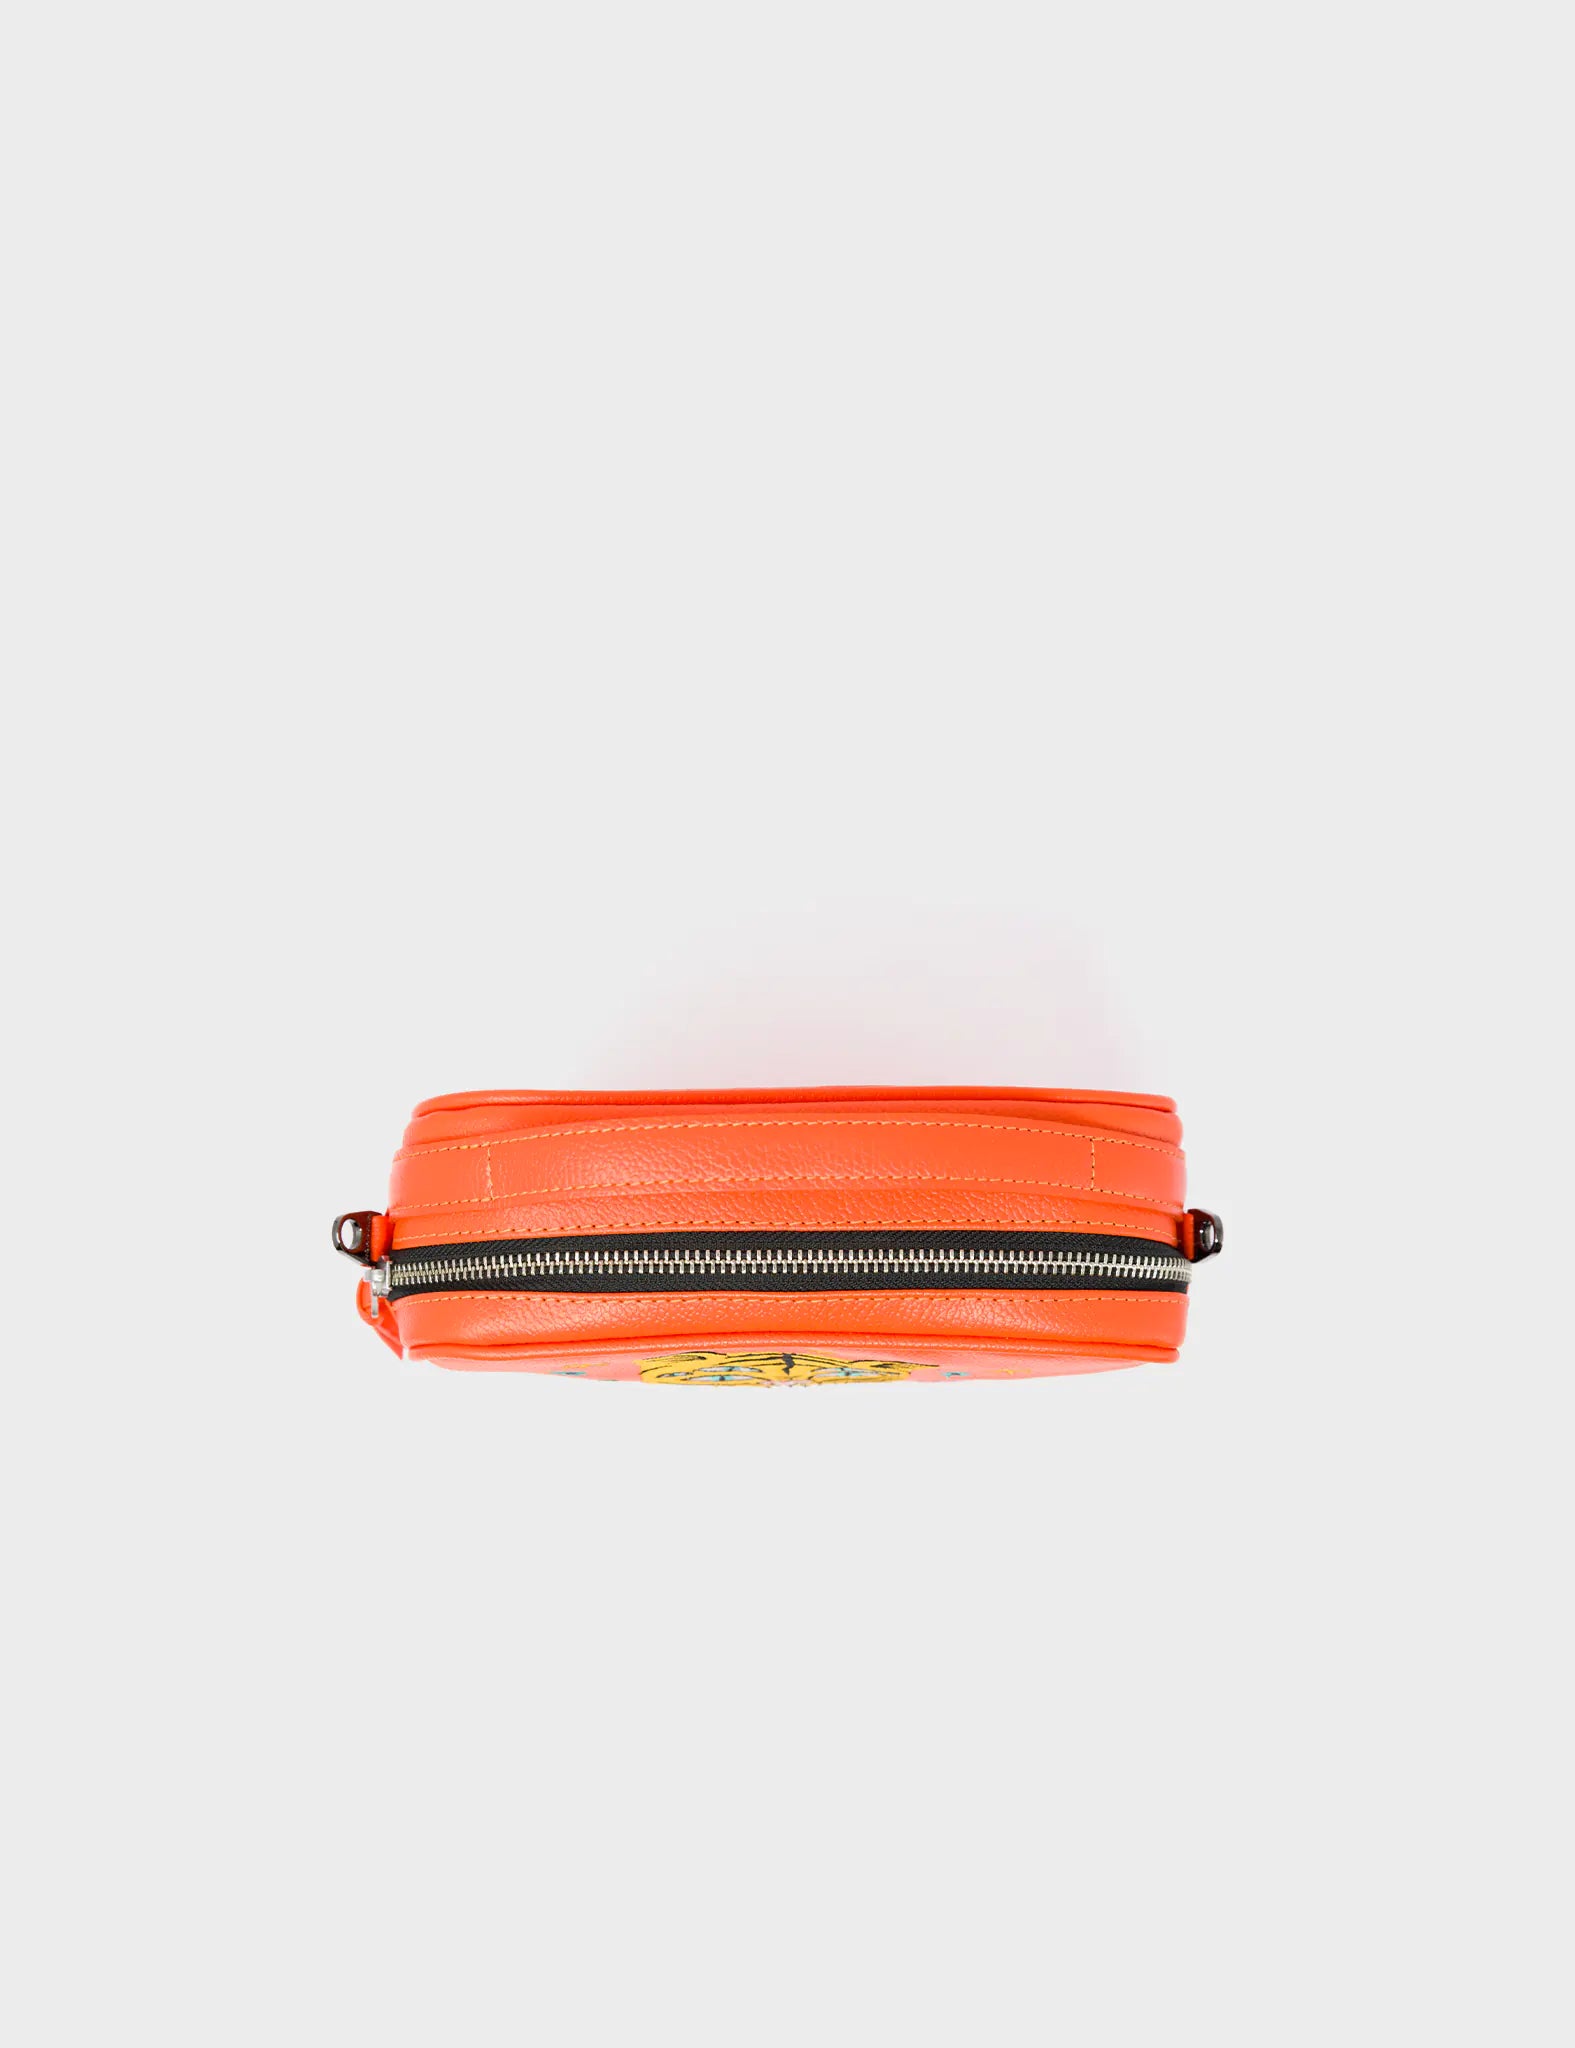 Verto Crossbody Vermillion Orange Leather Handbag - Tiger and Flowers Embroidery - Top